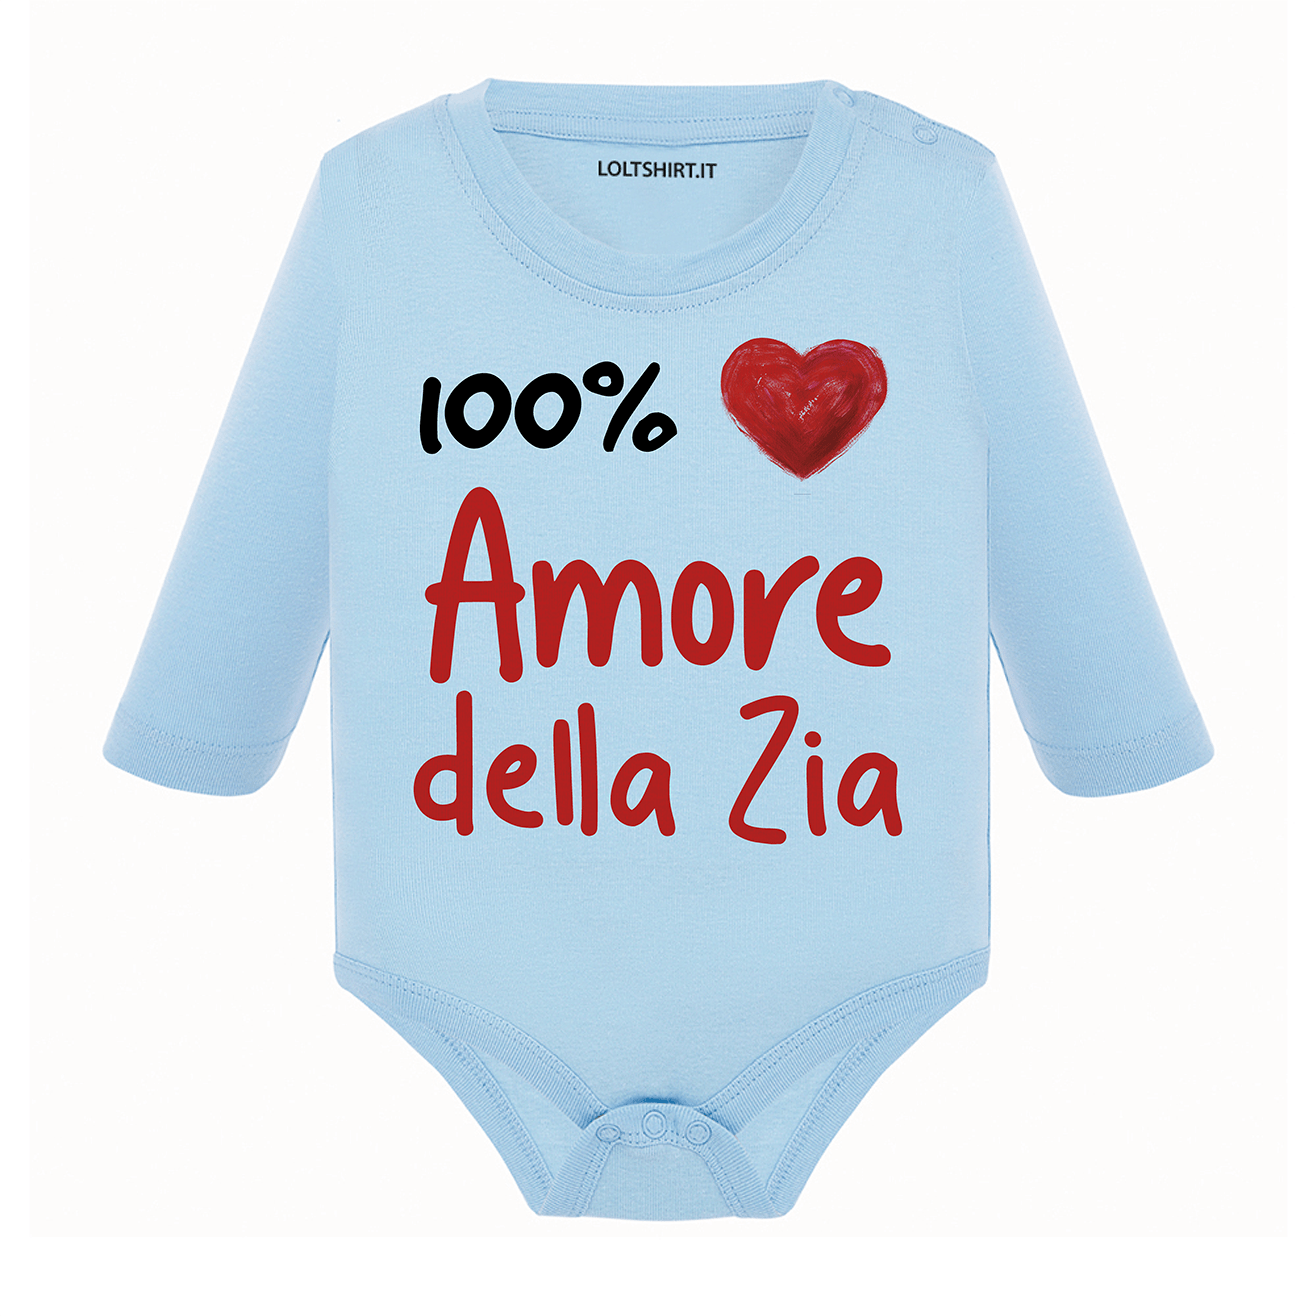 Lol T-Shirt Body per bimbi 3 mesi / Azzurro 100% Amore della zia